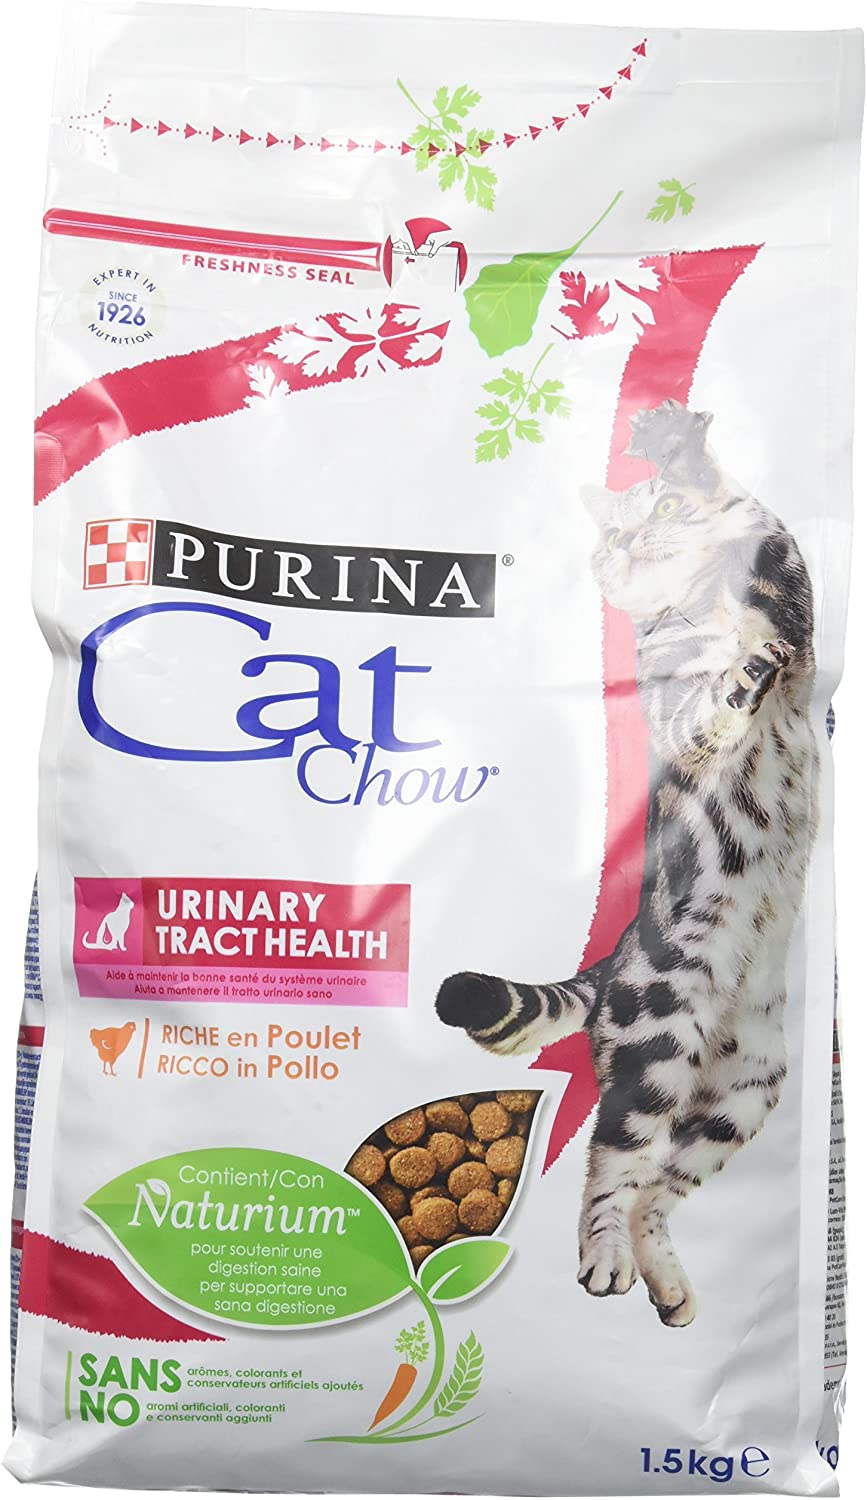  Purina Cat Chow Comida Seco para Gatos Adultos Cuidado Tracto Urinario Rico en Pollo - 1.5 Kg 